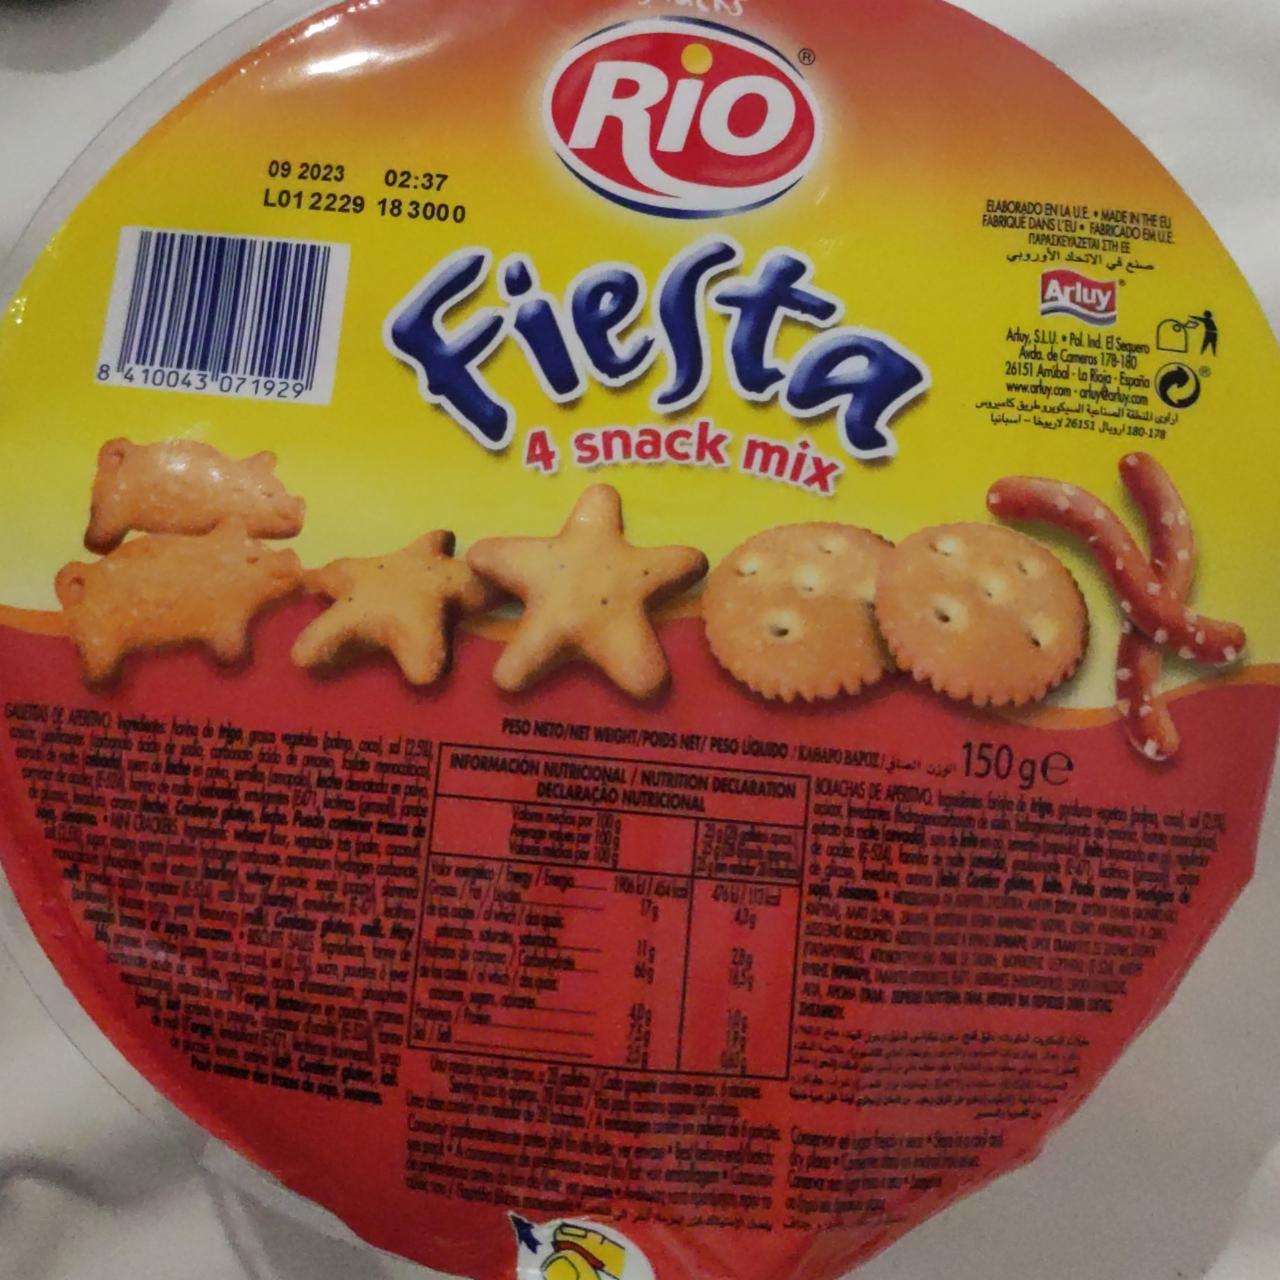 Fotografie - Fiesta 4 snack mix Rio